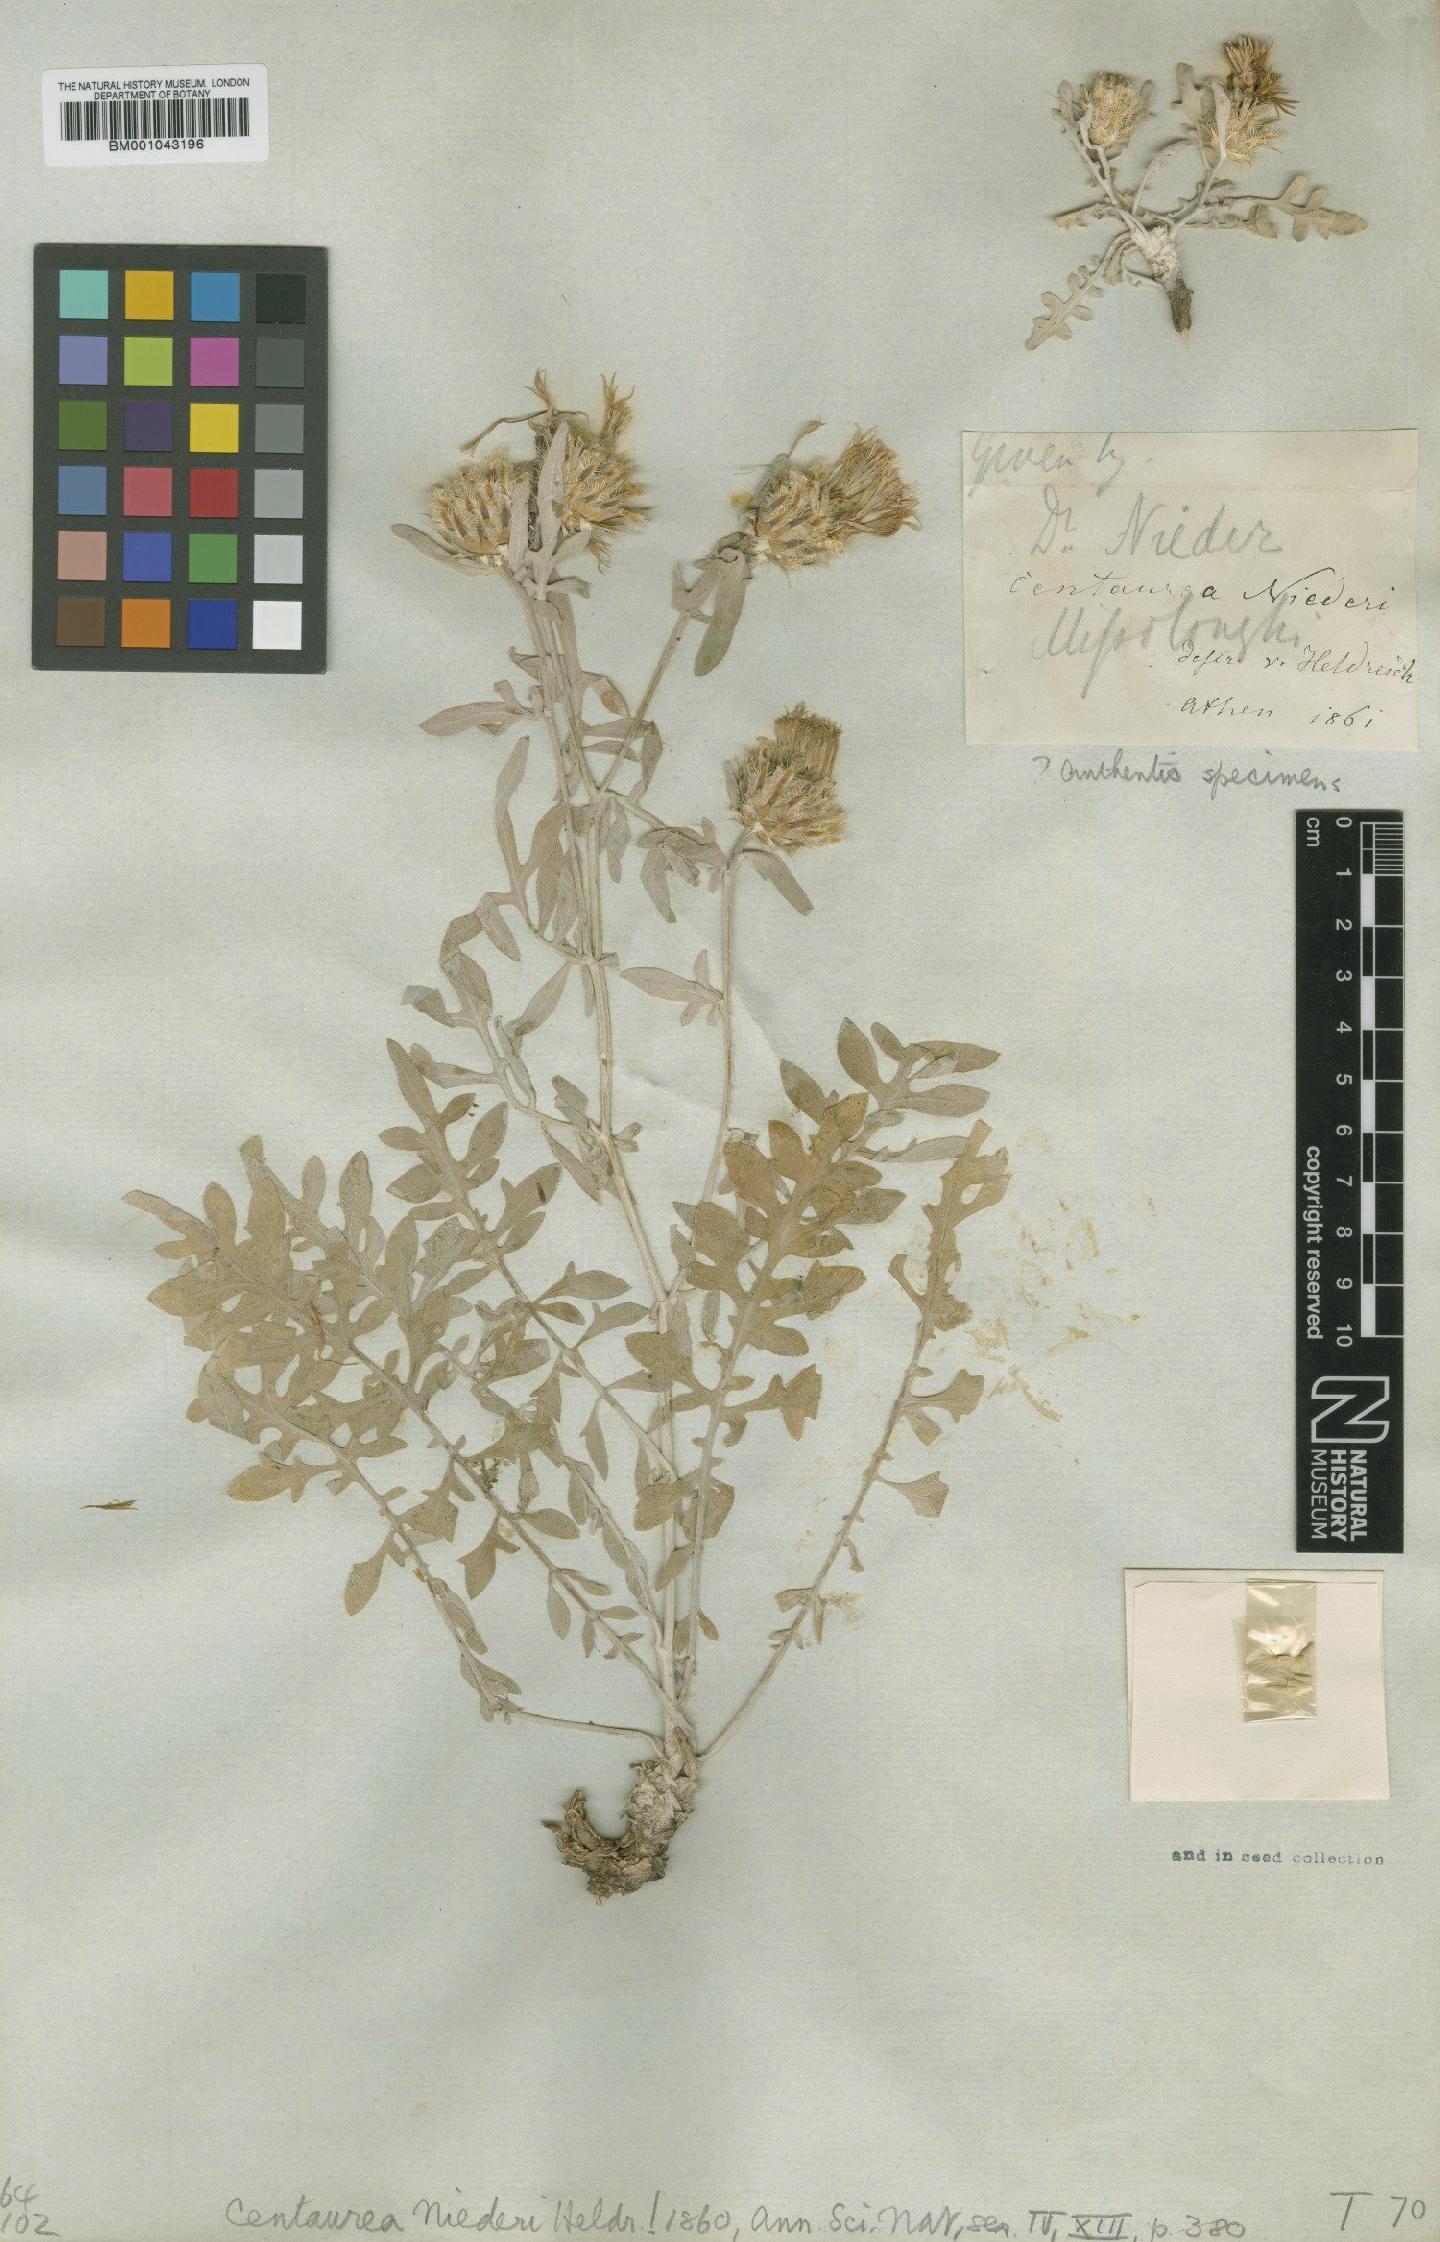 To NHMUK collection (Centaurea niederi Heldr.; Type; NHMUK:ecatalogue:1987828)